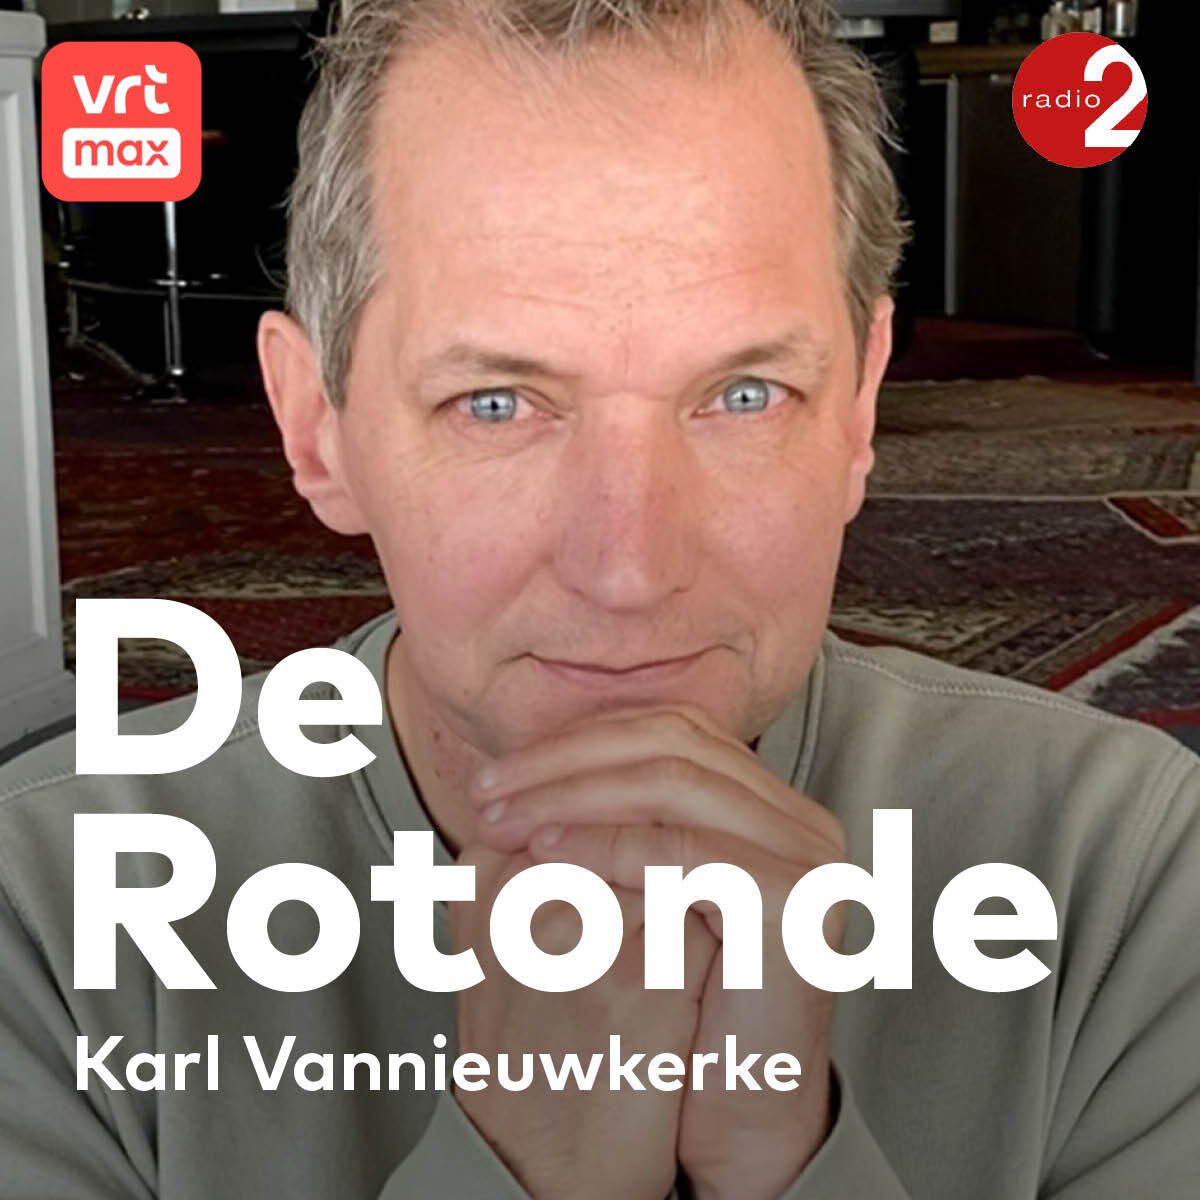 Karl Vannieuwkerke